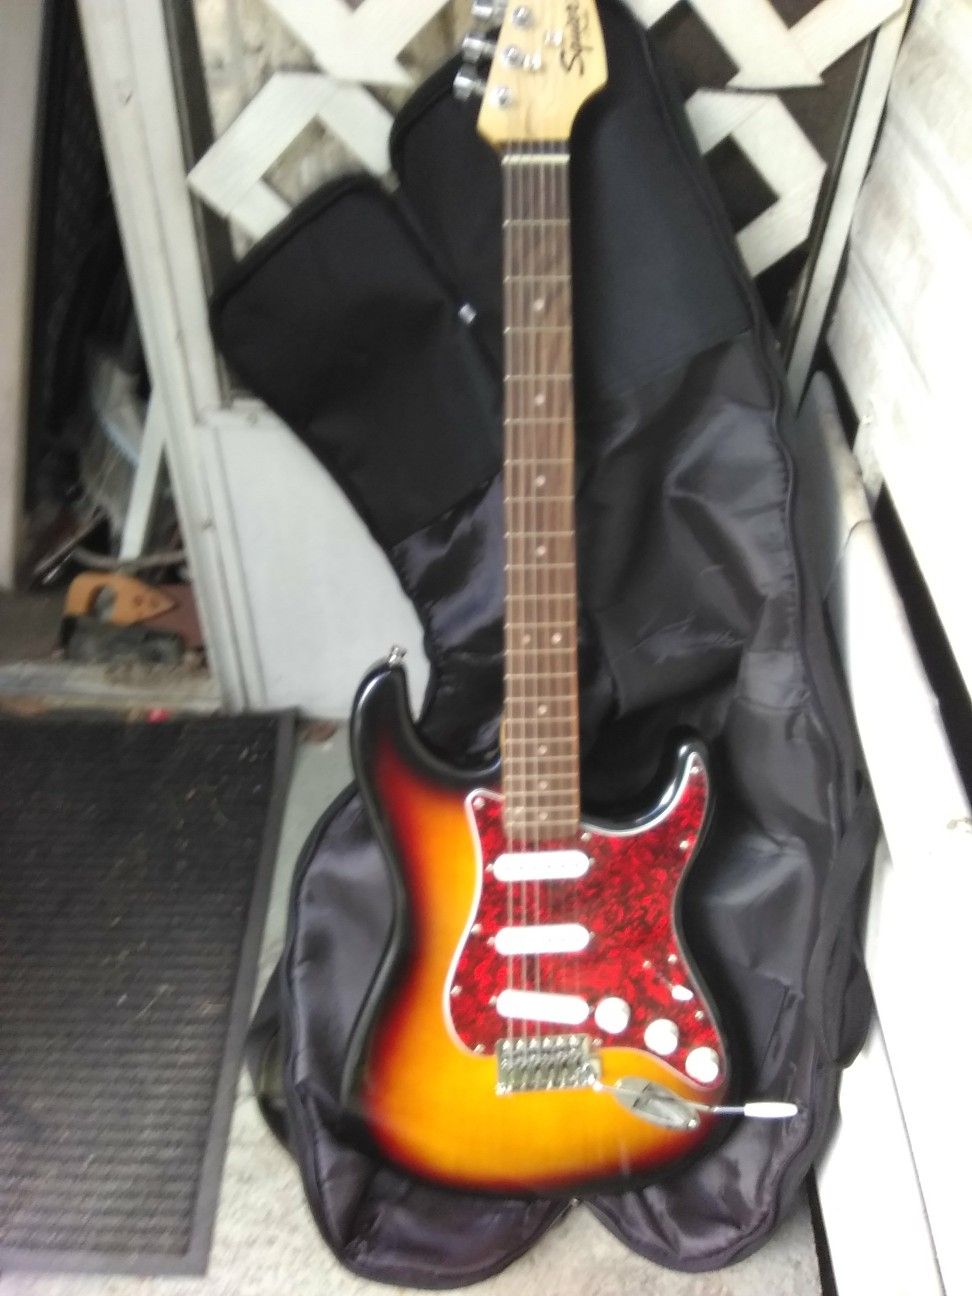 Fender strat guitar